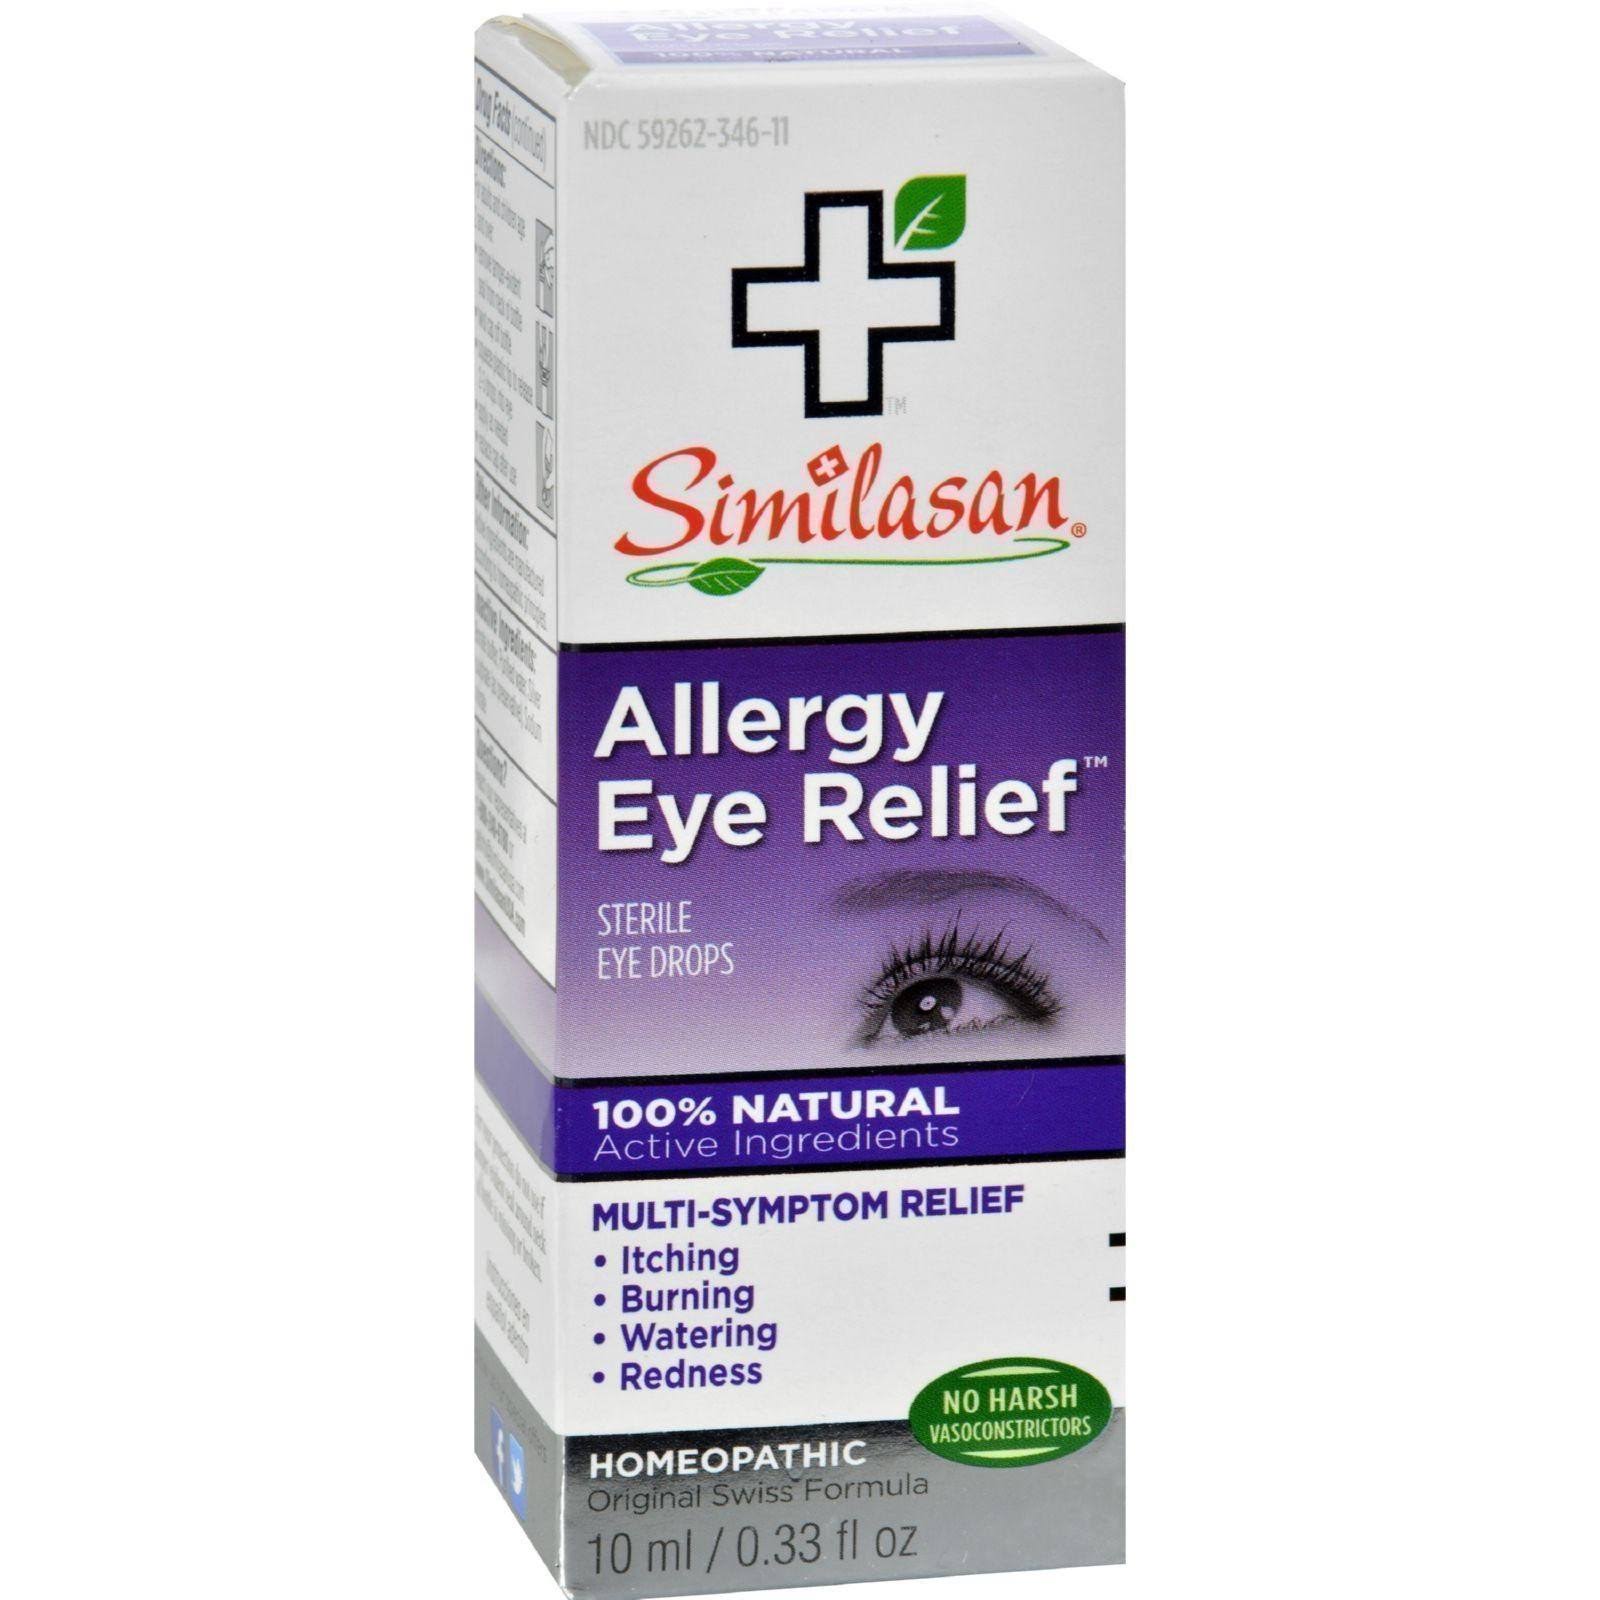 Similasan Allergy Eye Relief Sterile Eye Drops - 0.33oz